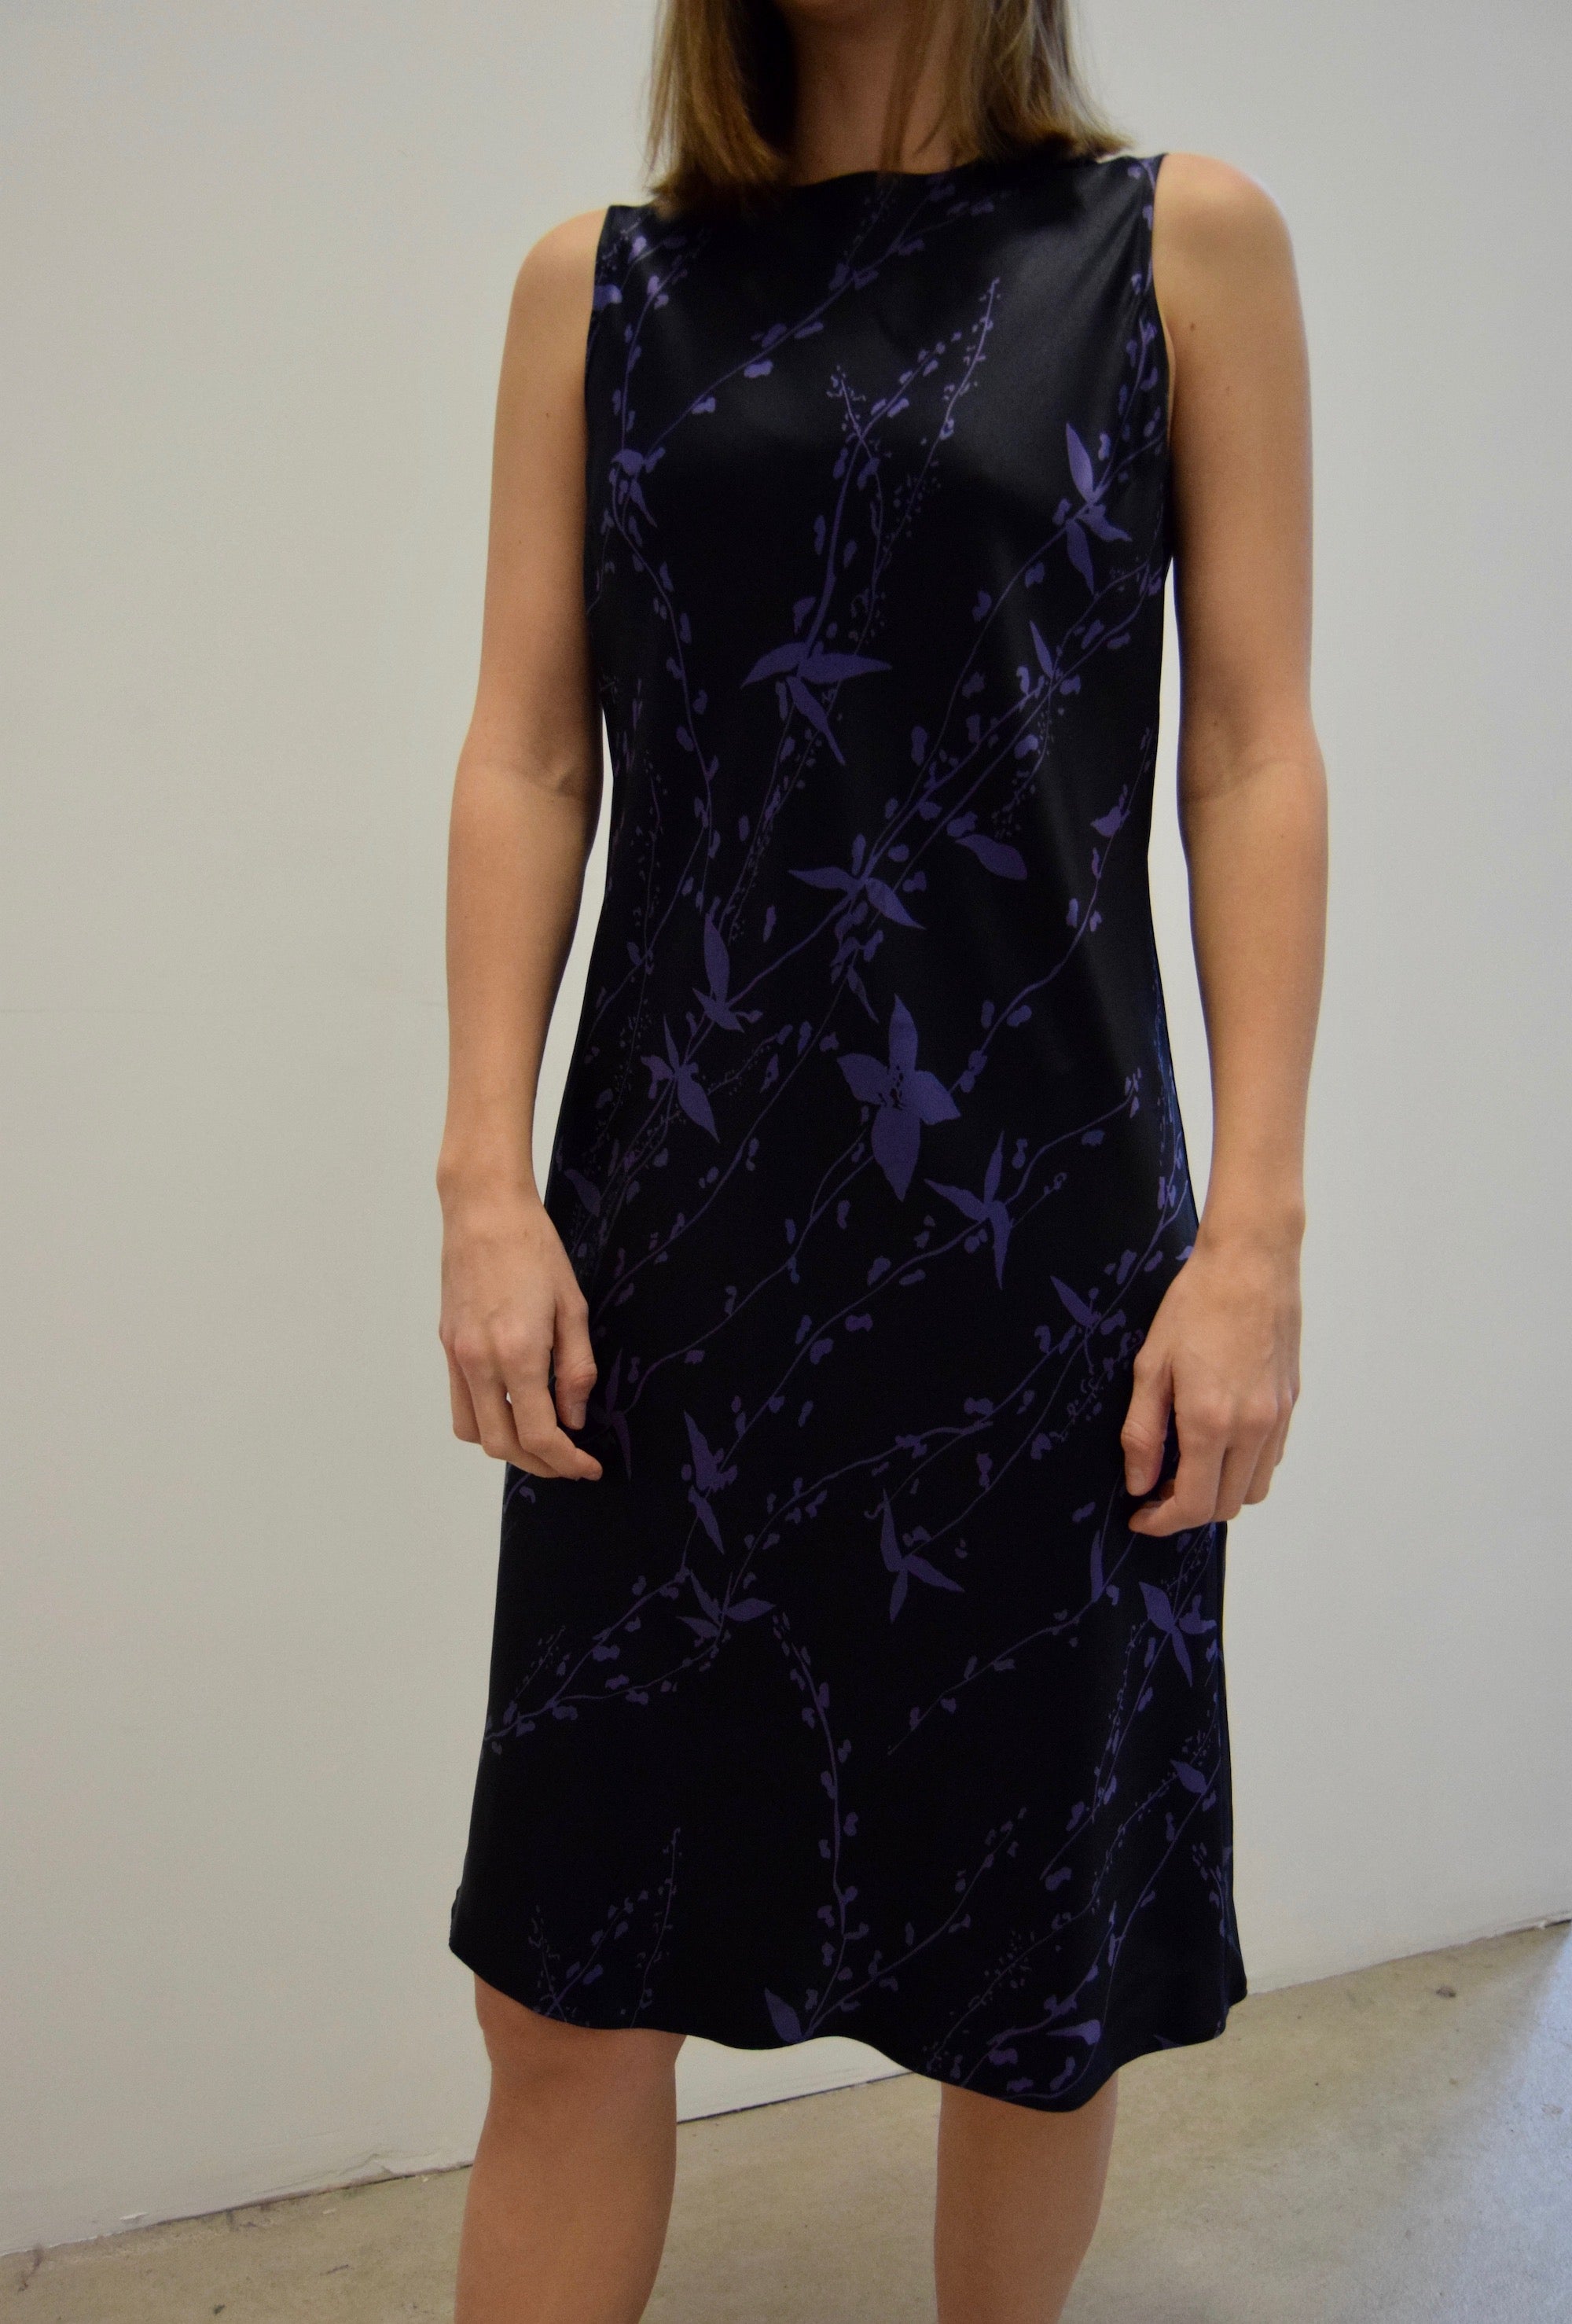 DKNY Silk Dark Indigo and Violet Botanical Dress